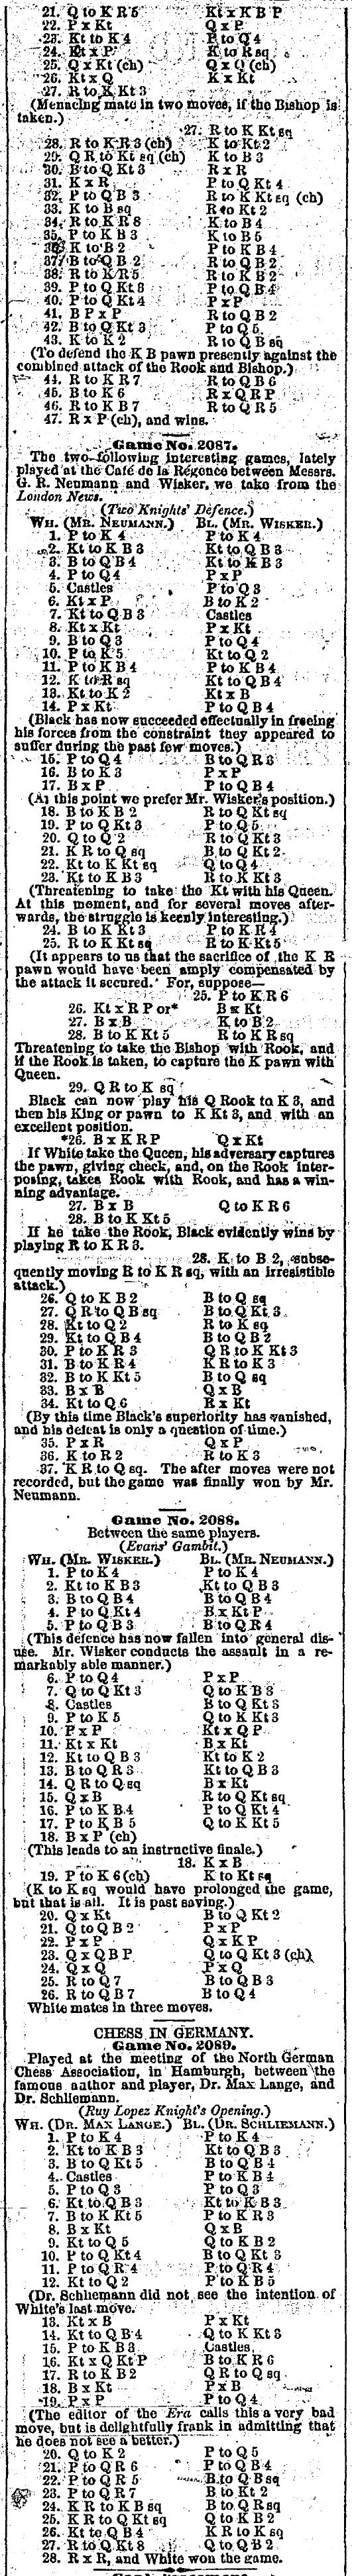 1868.11.20-02 Philadelphia Daily Evening Bulletin.jpg